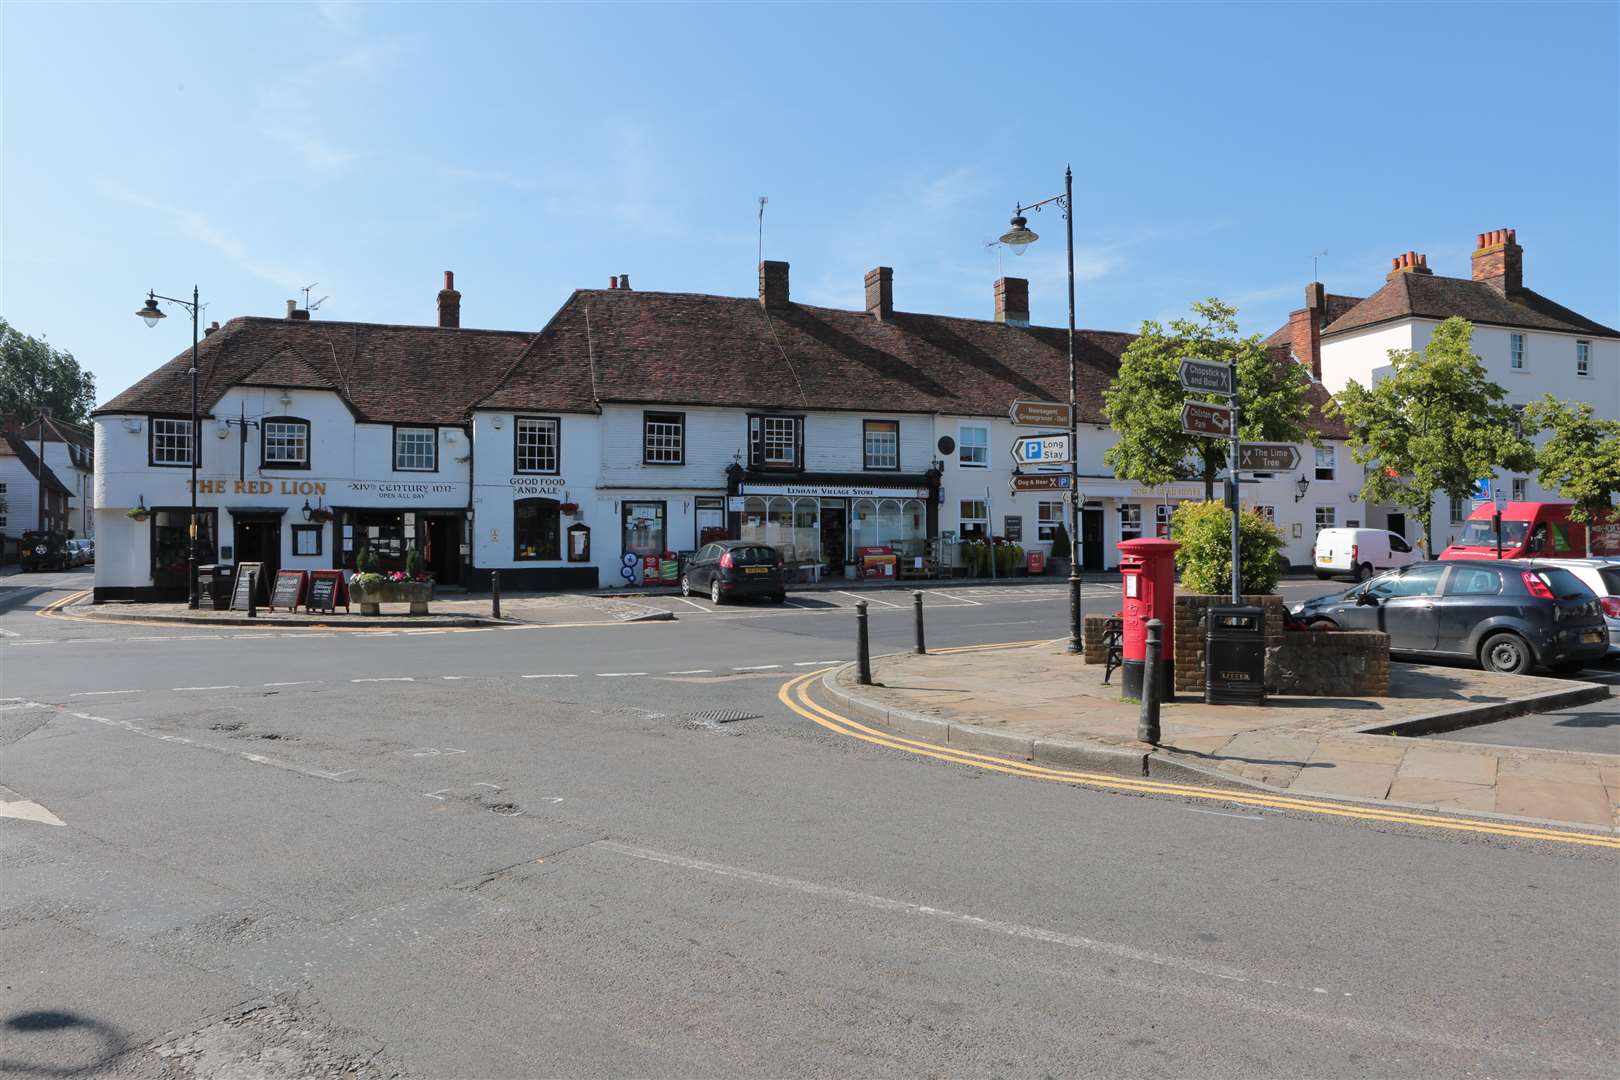 Lenham village square